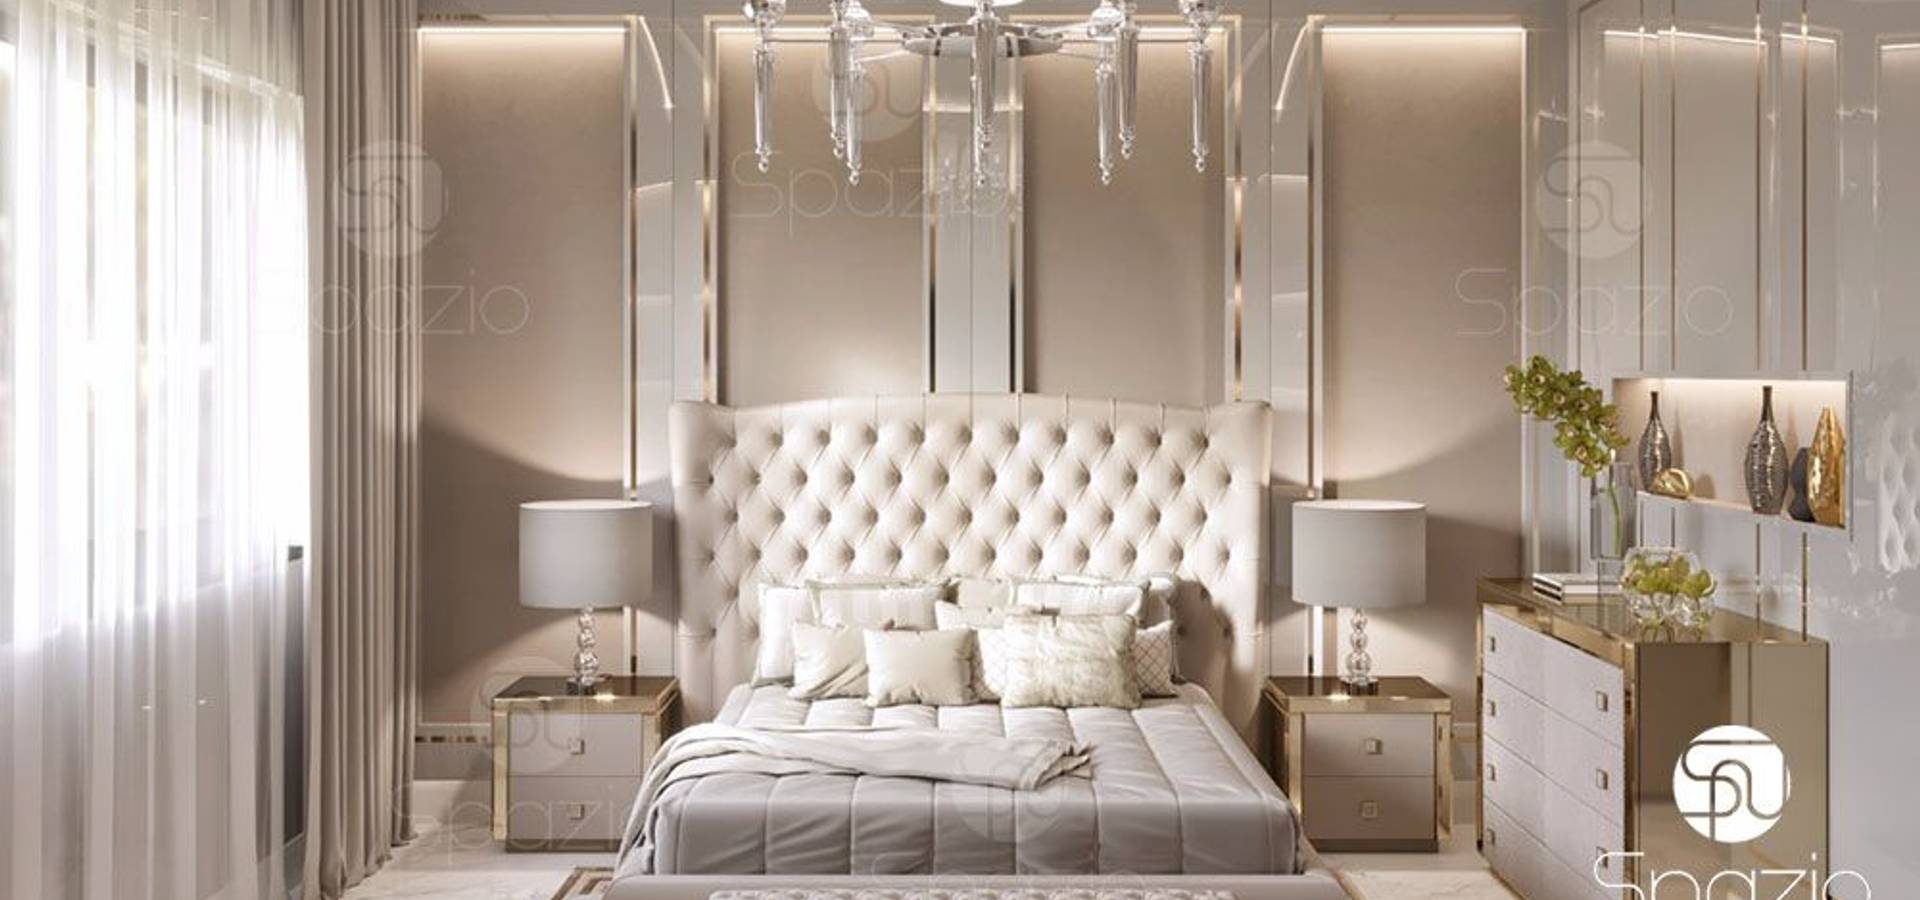 Luxury Classic Master Bedroom Interior Design And Decor In